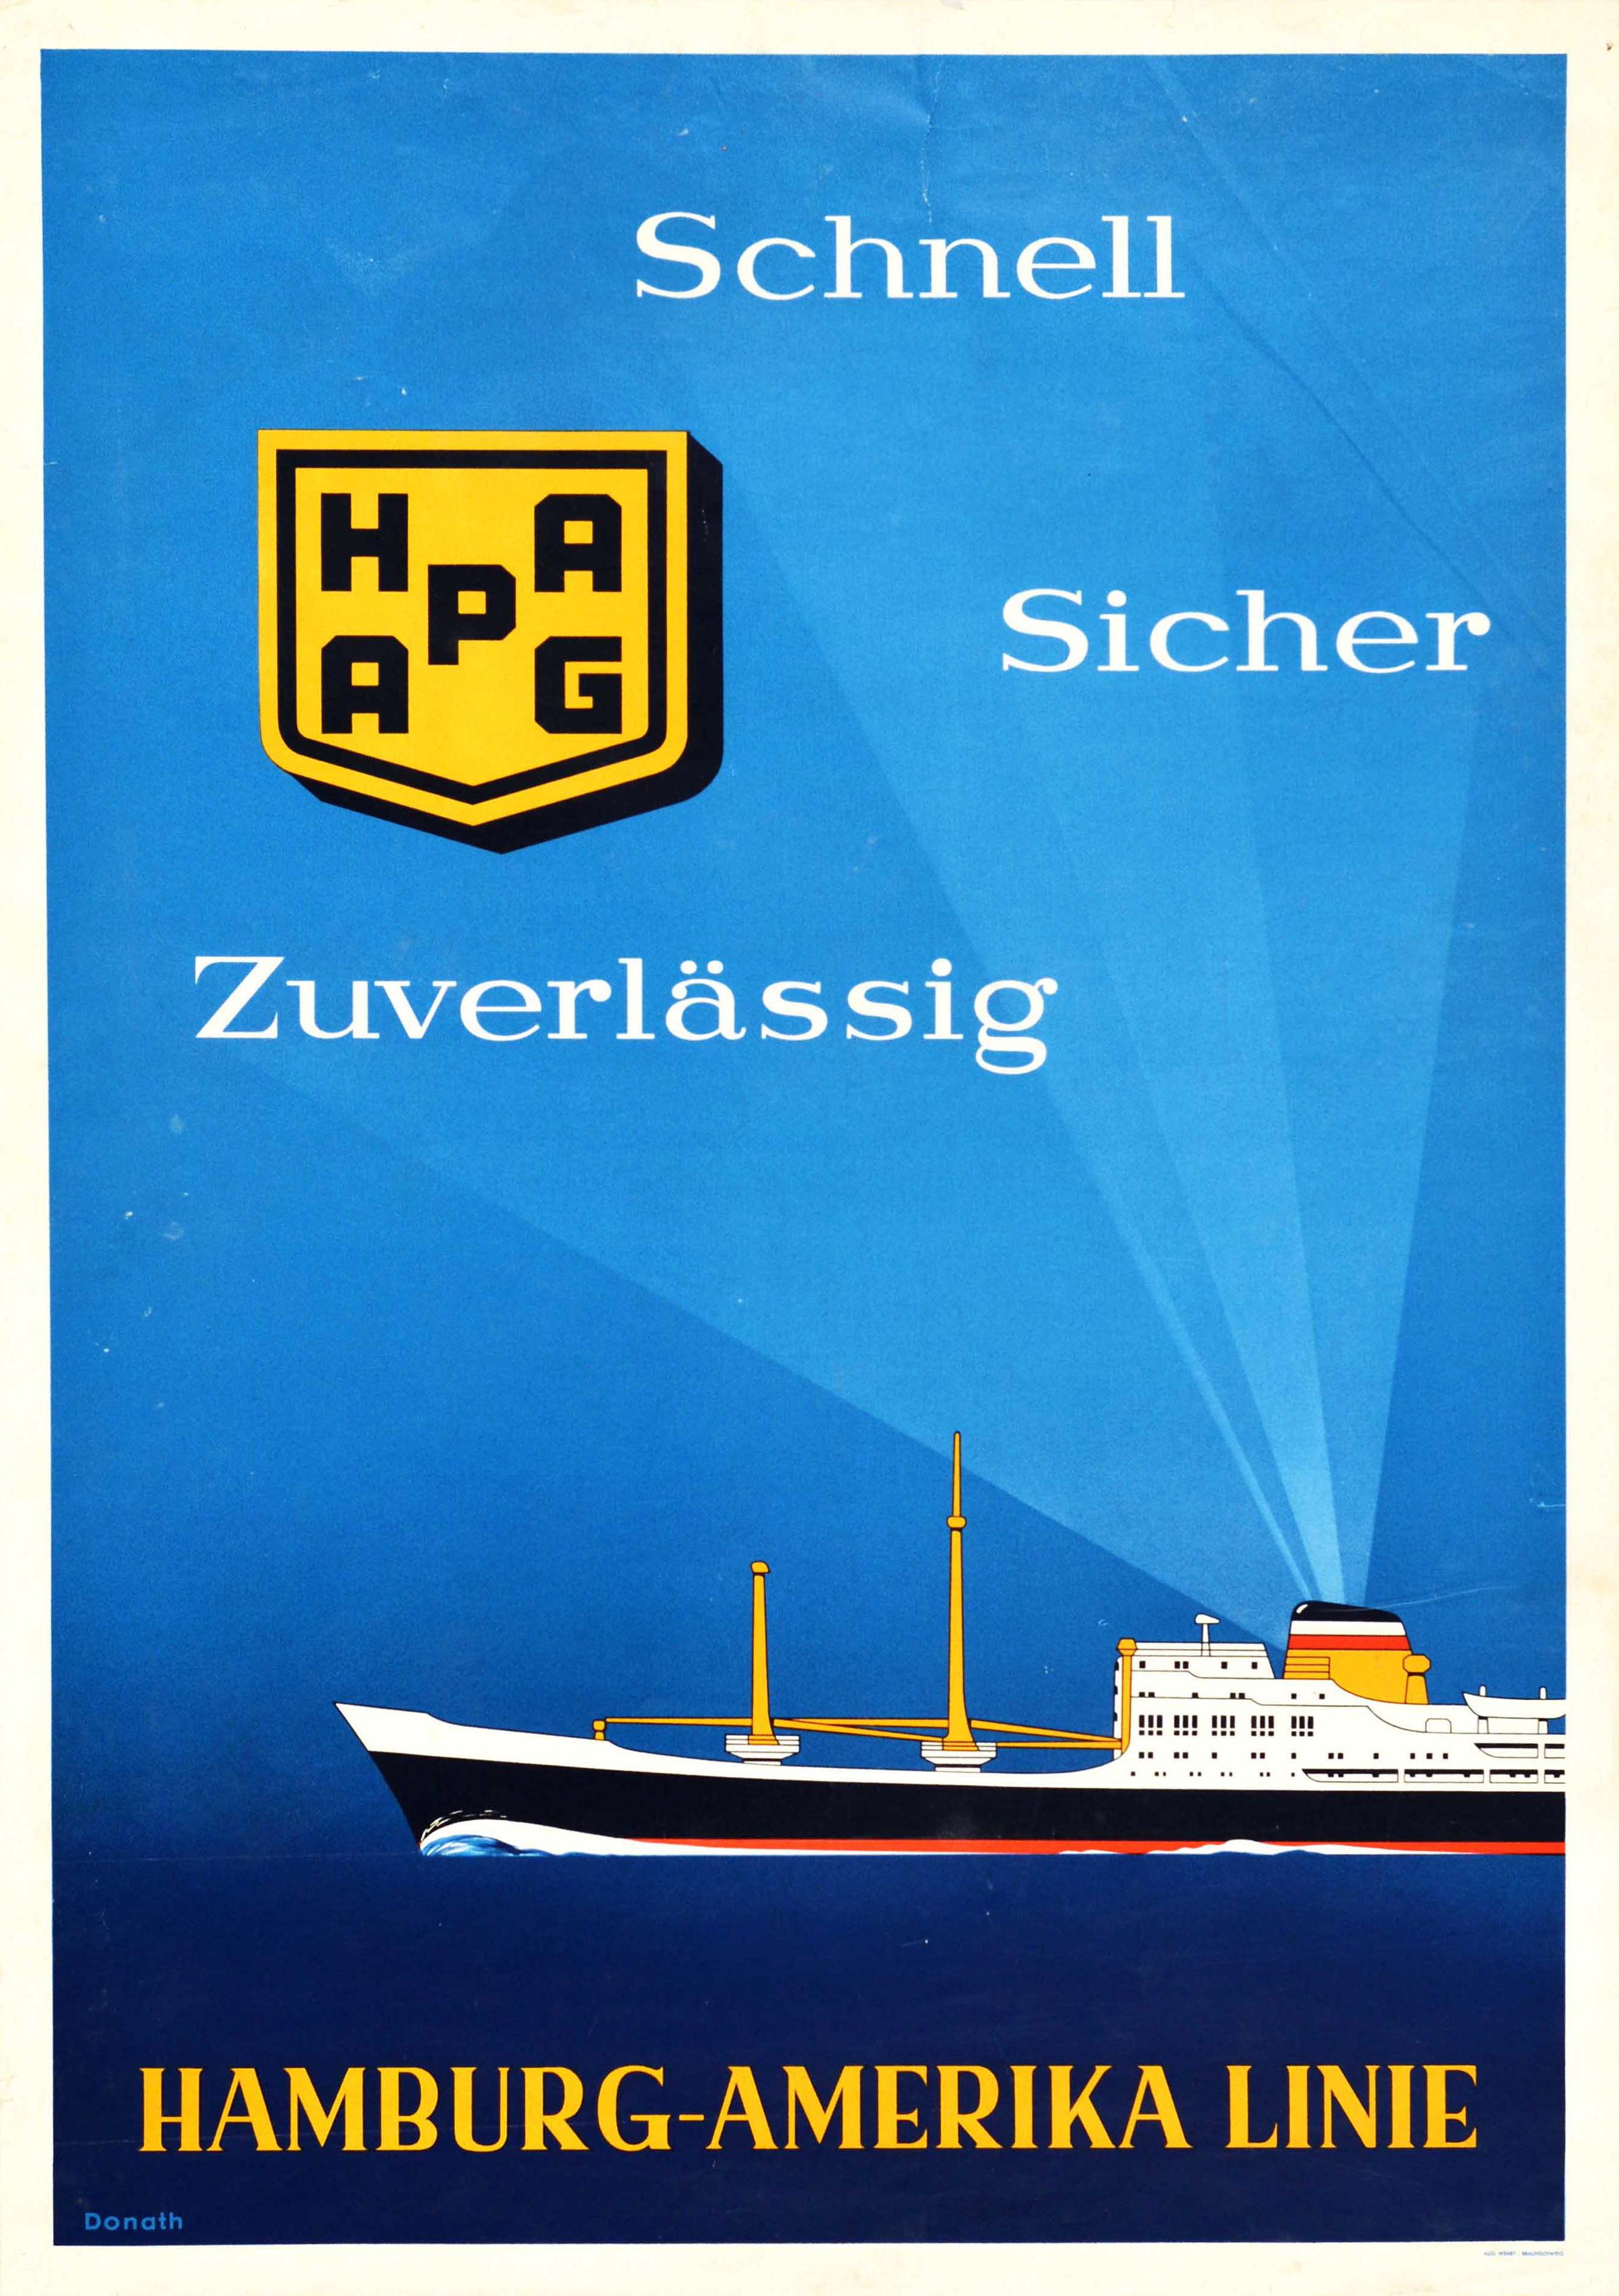 Donath Print - Original Vintage Travel Poster Hamburg America Liner Fast Safe Reliable Ship Art